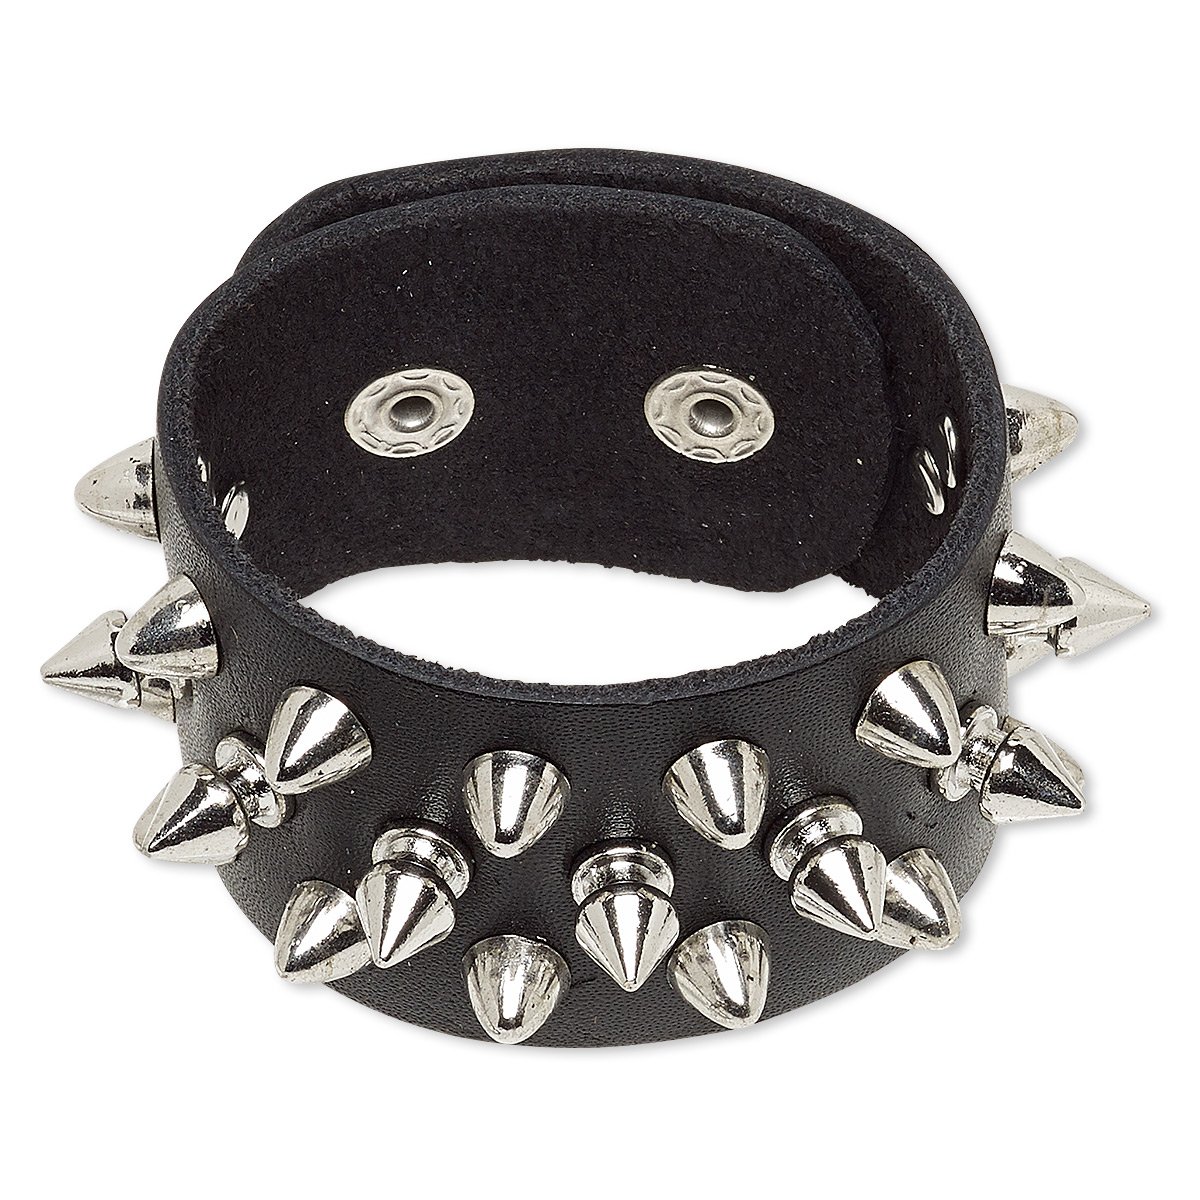 Bracelet, leather (dyed) and imitation rhodium-plated steel, black ...